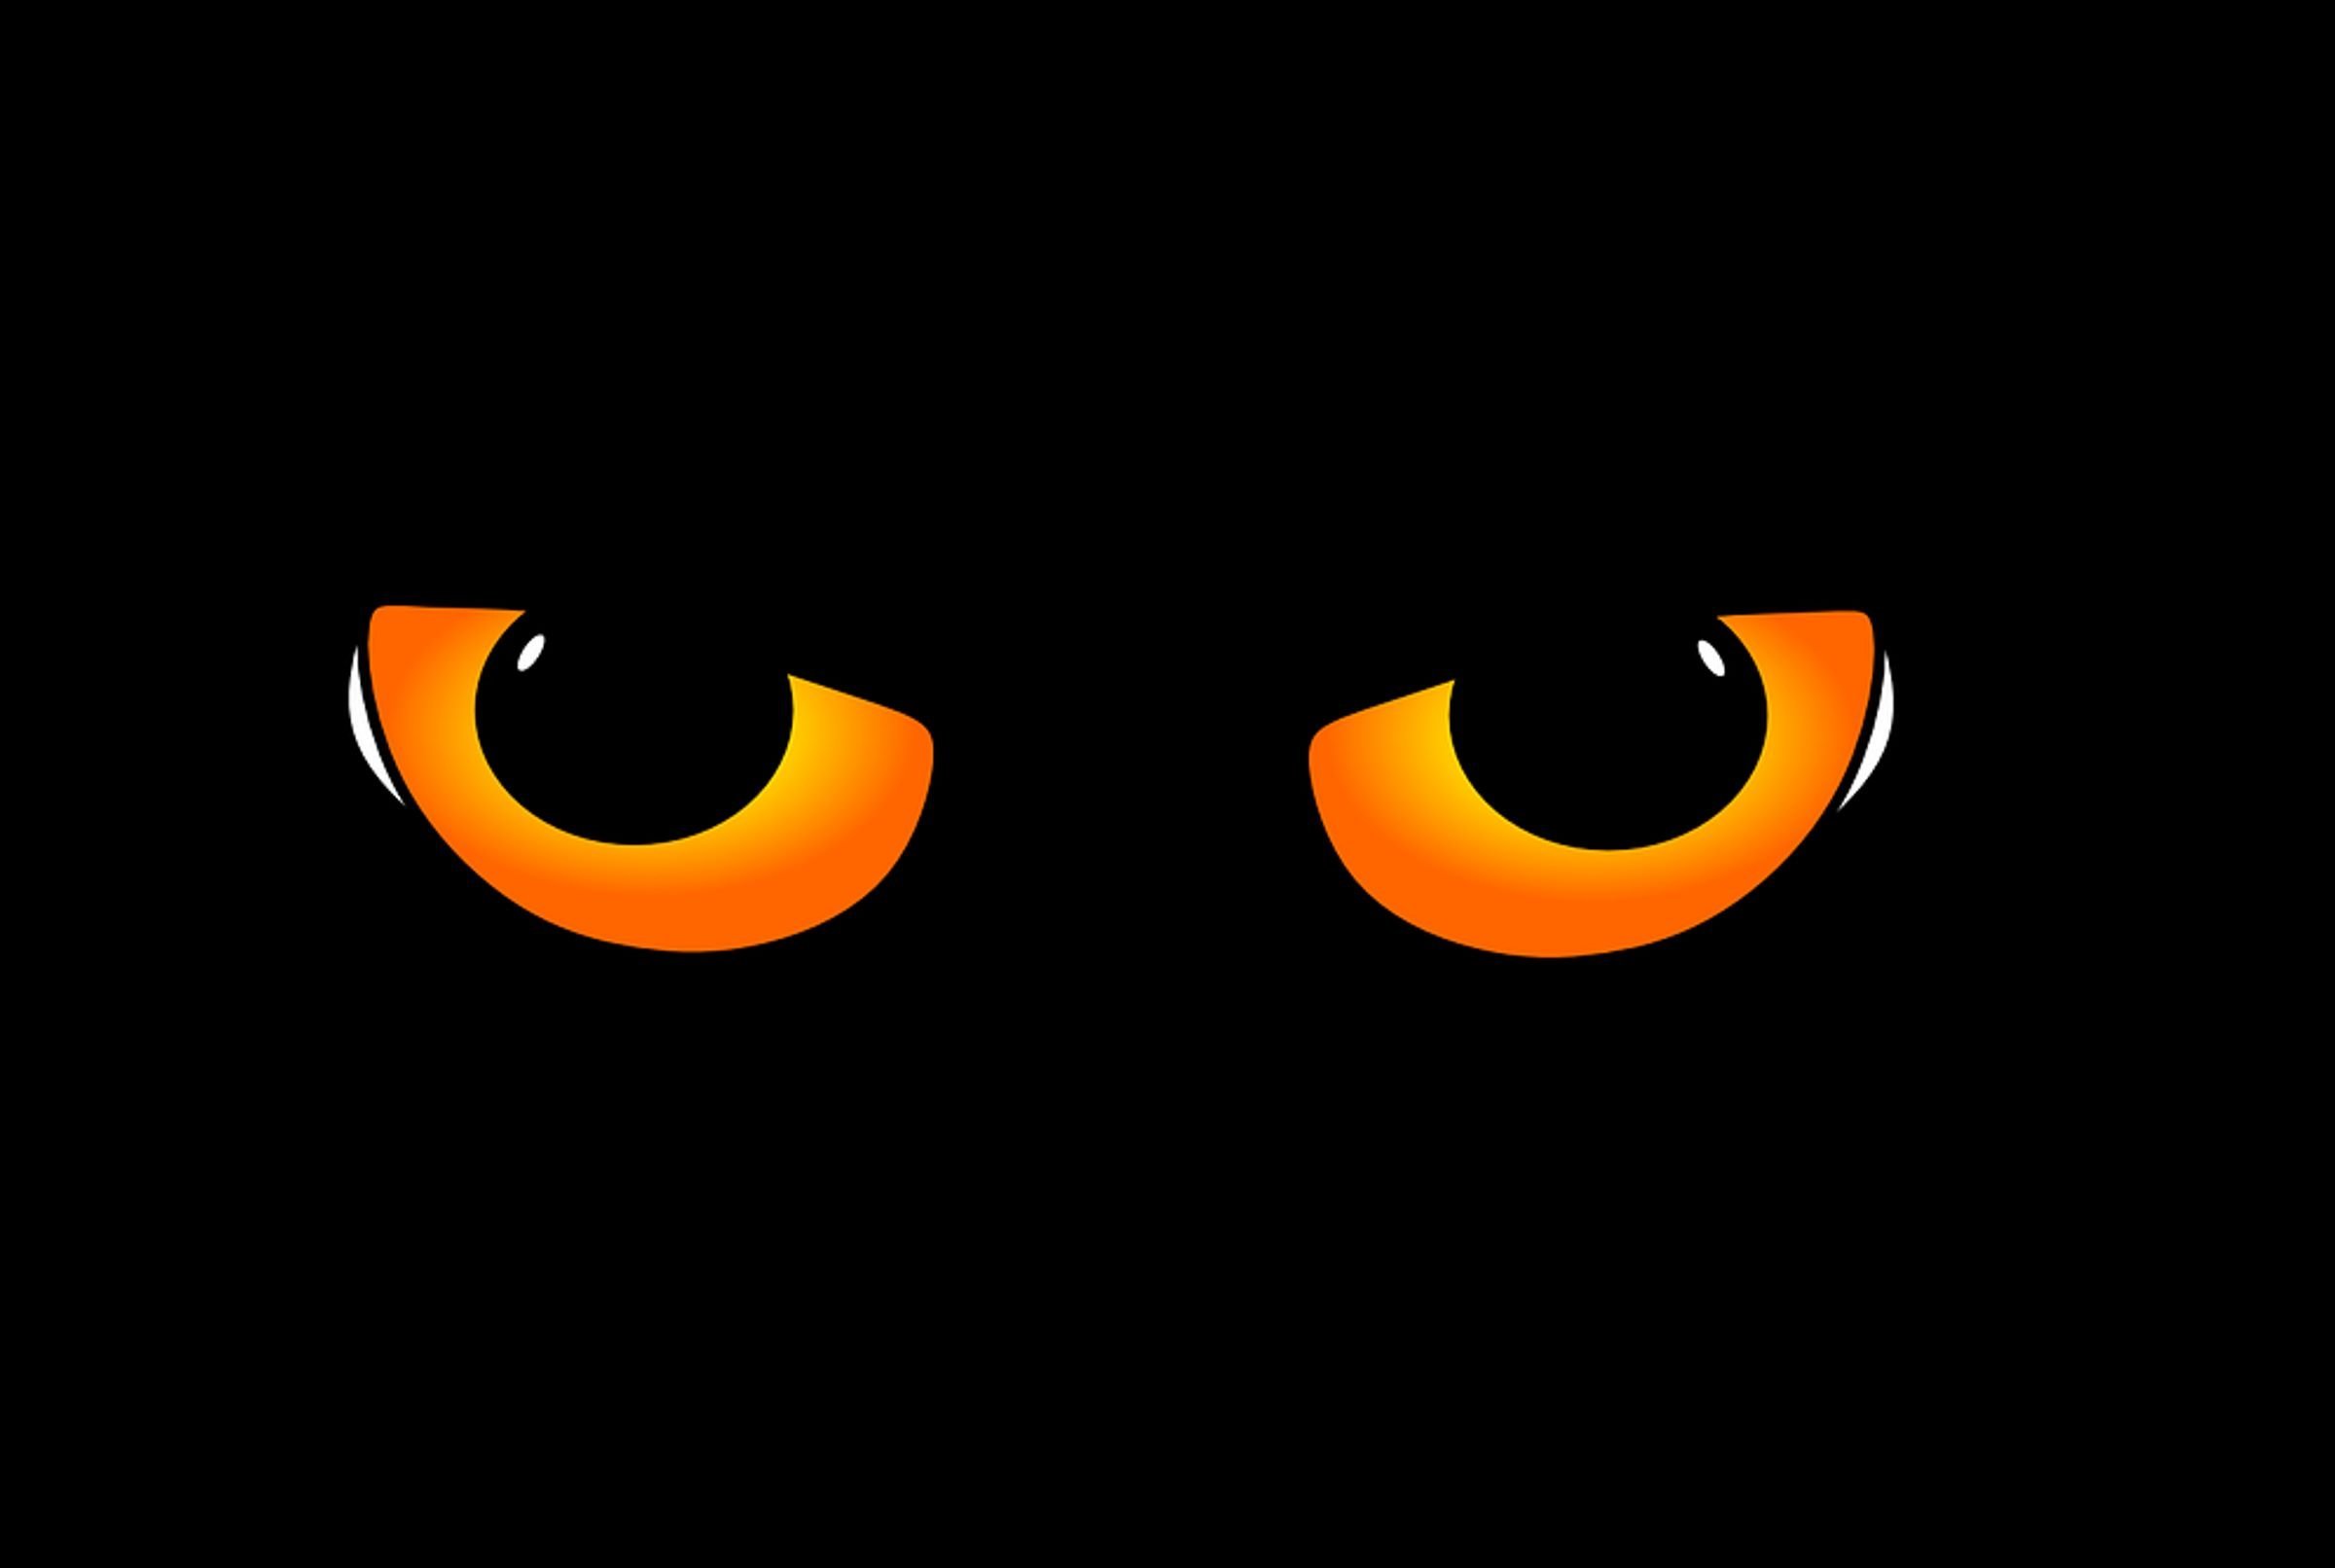 Глаза кота в темноте